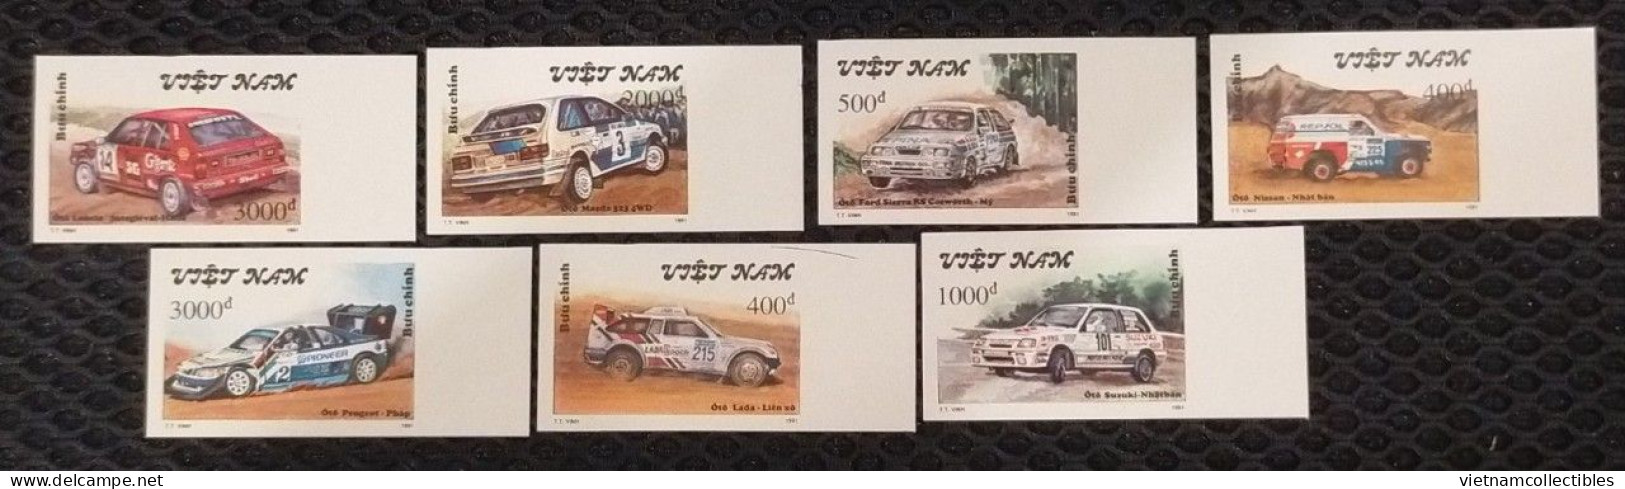 Vietnam Viet Nam MNH Imperf Stamps 1991 : Rally Cars / Car (Ms621) - Viêt-Nam